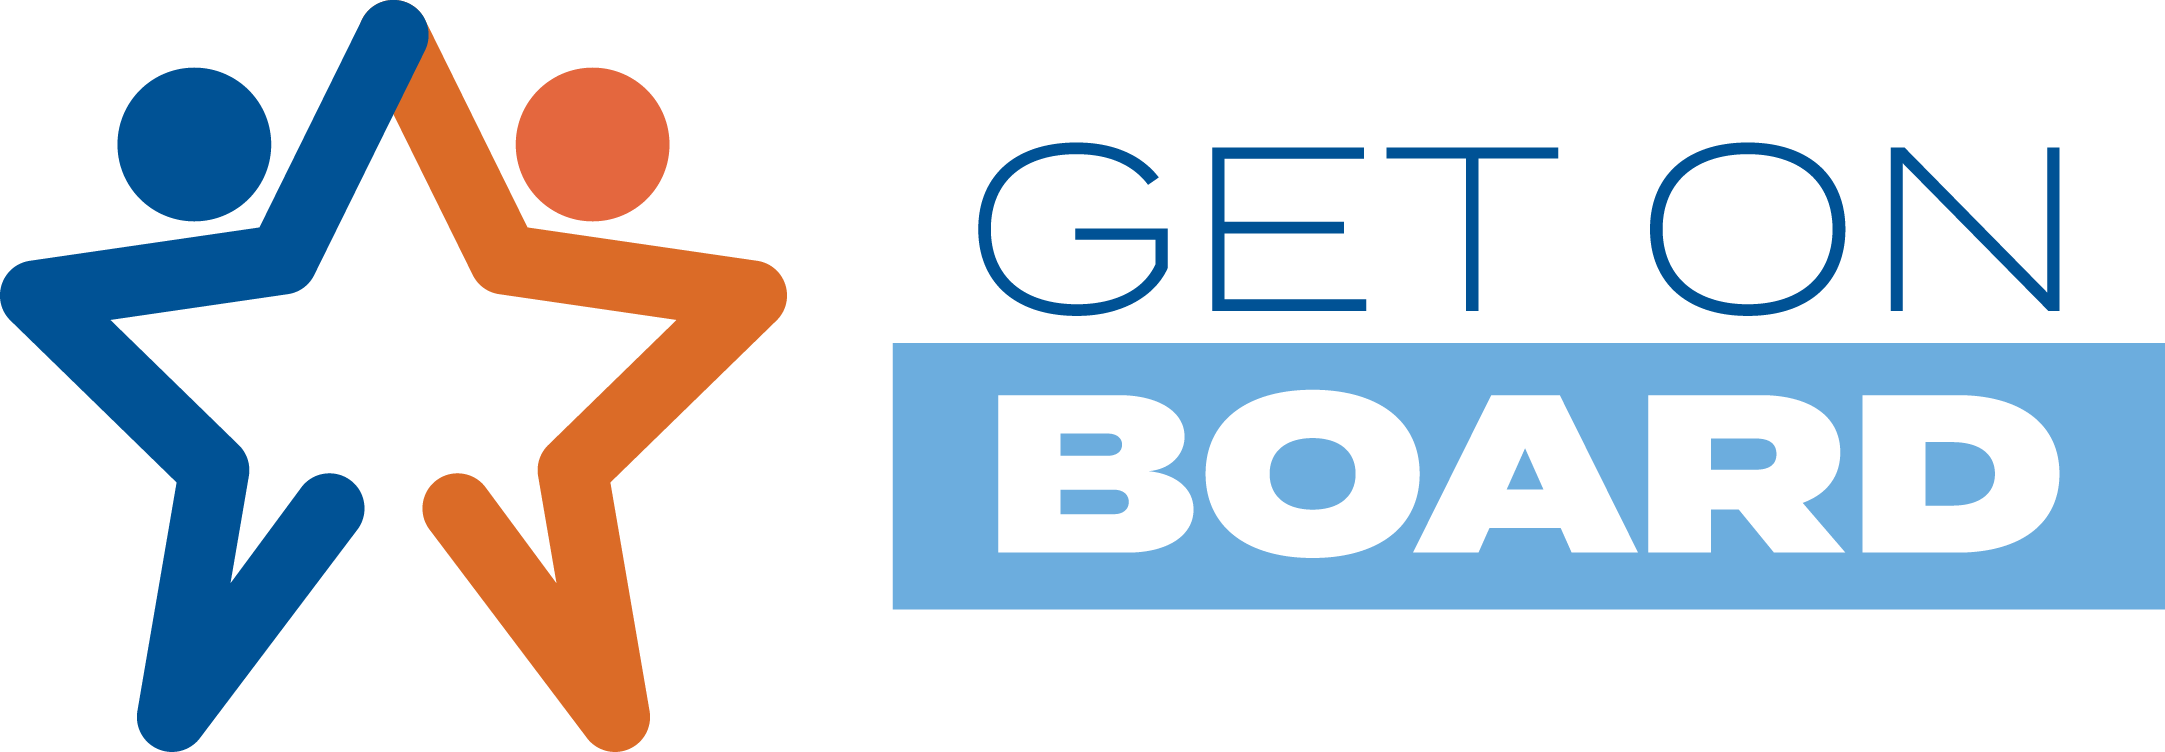 Get on Board horizontal logo